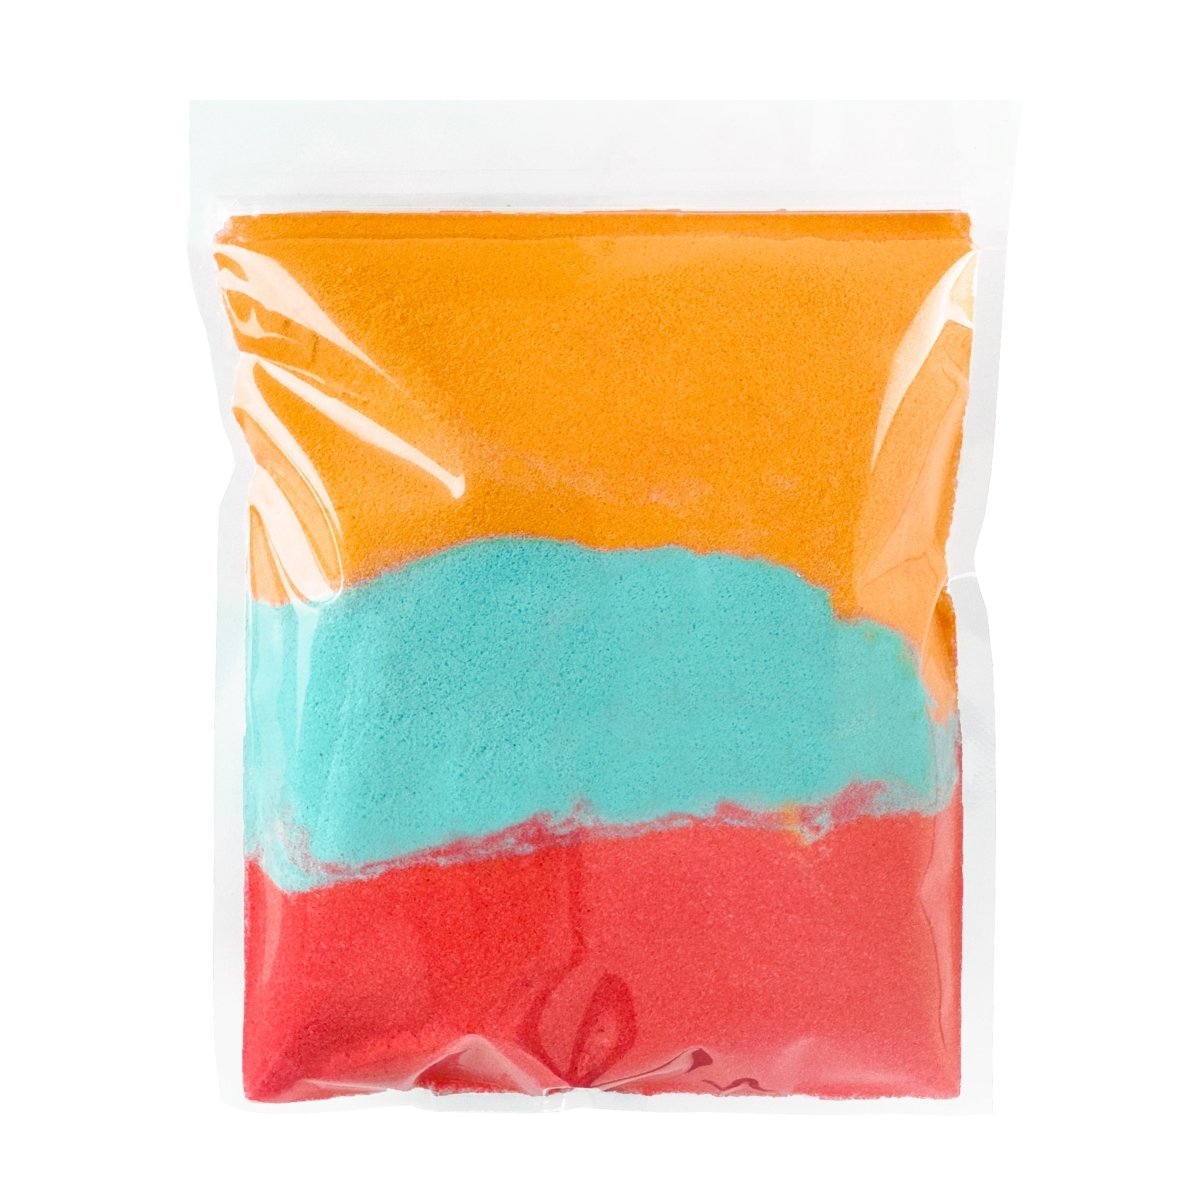 Fuzzy Bath Dust for Kids & Adults - Colourful Glitters & Peach Crumble Fragrance - Made in Australia by Bath Box